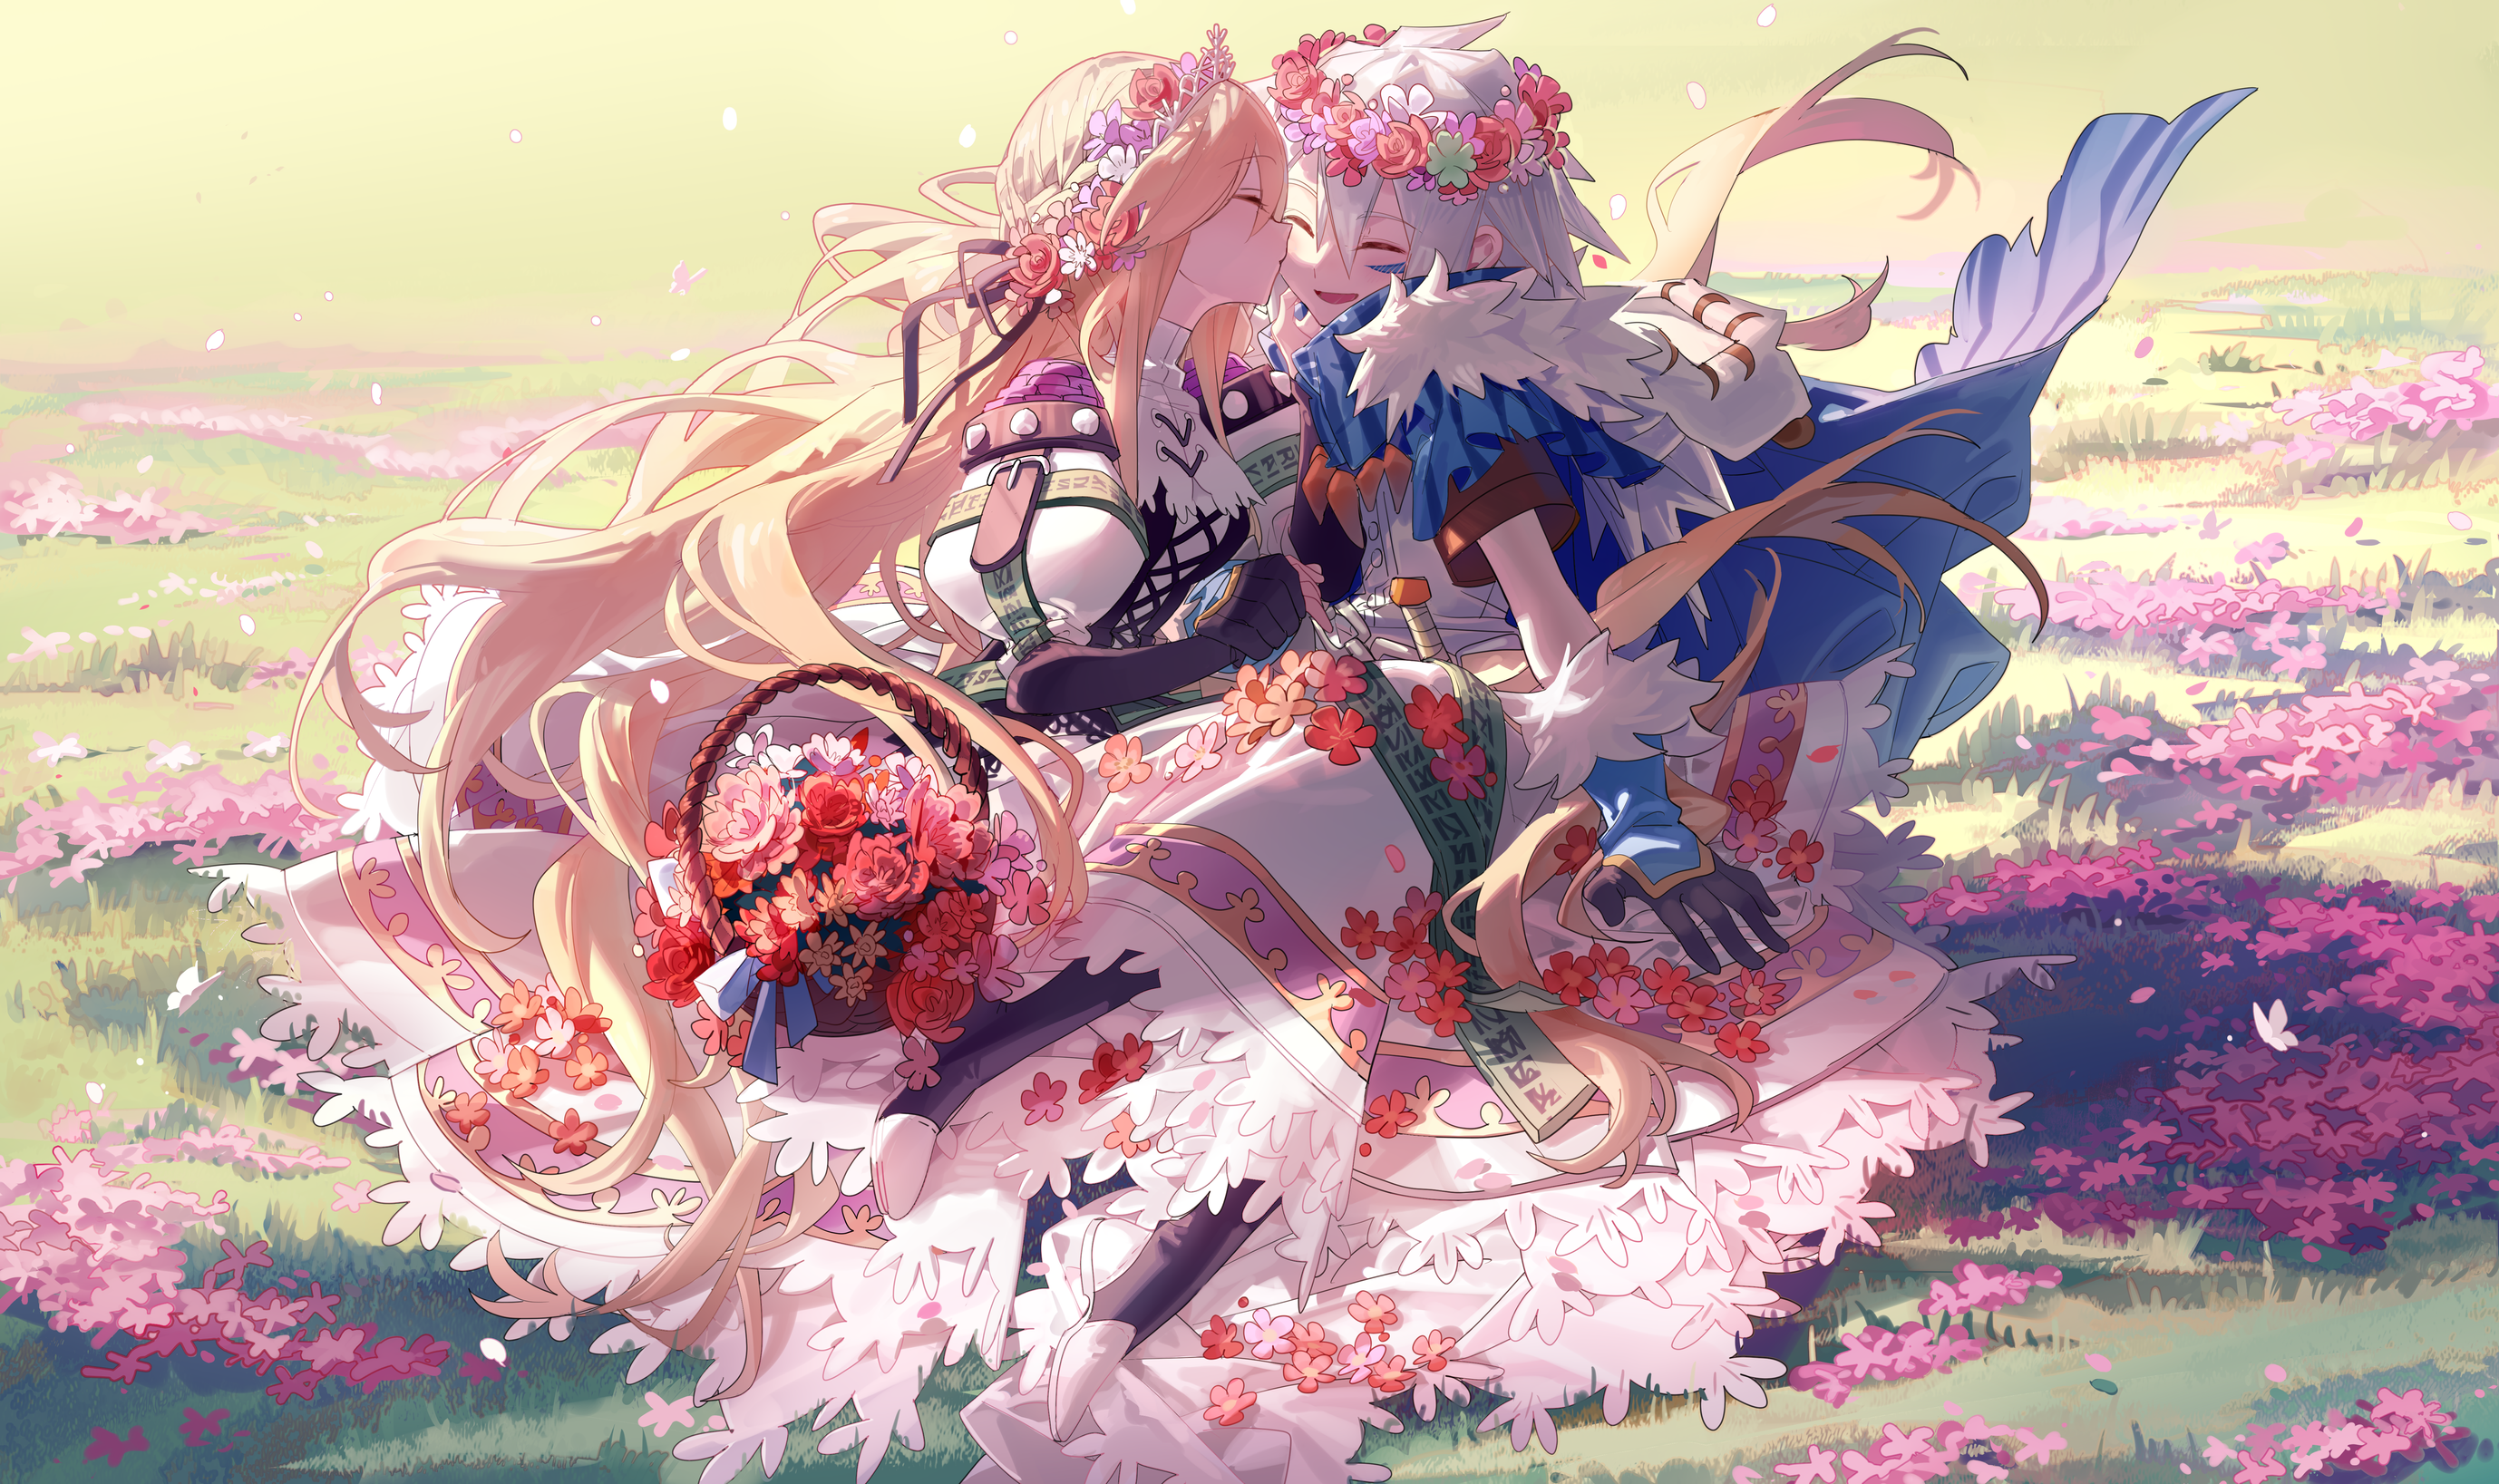 Anime 2756x1637 anime Pixiv anime girls flowers flower crown kissing Yggdra Union Milanor Yggdra Yuril Artwaltz grass closed eyes baskets anime boys gloves Shuno (artist)